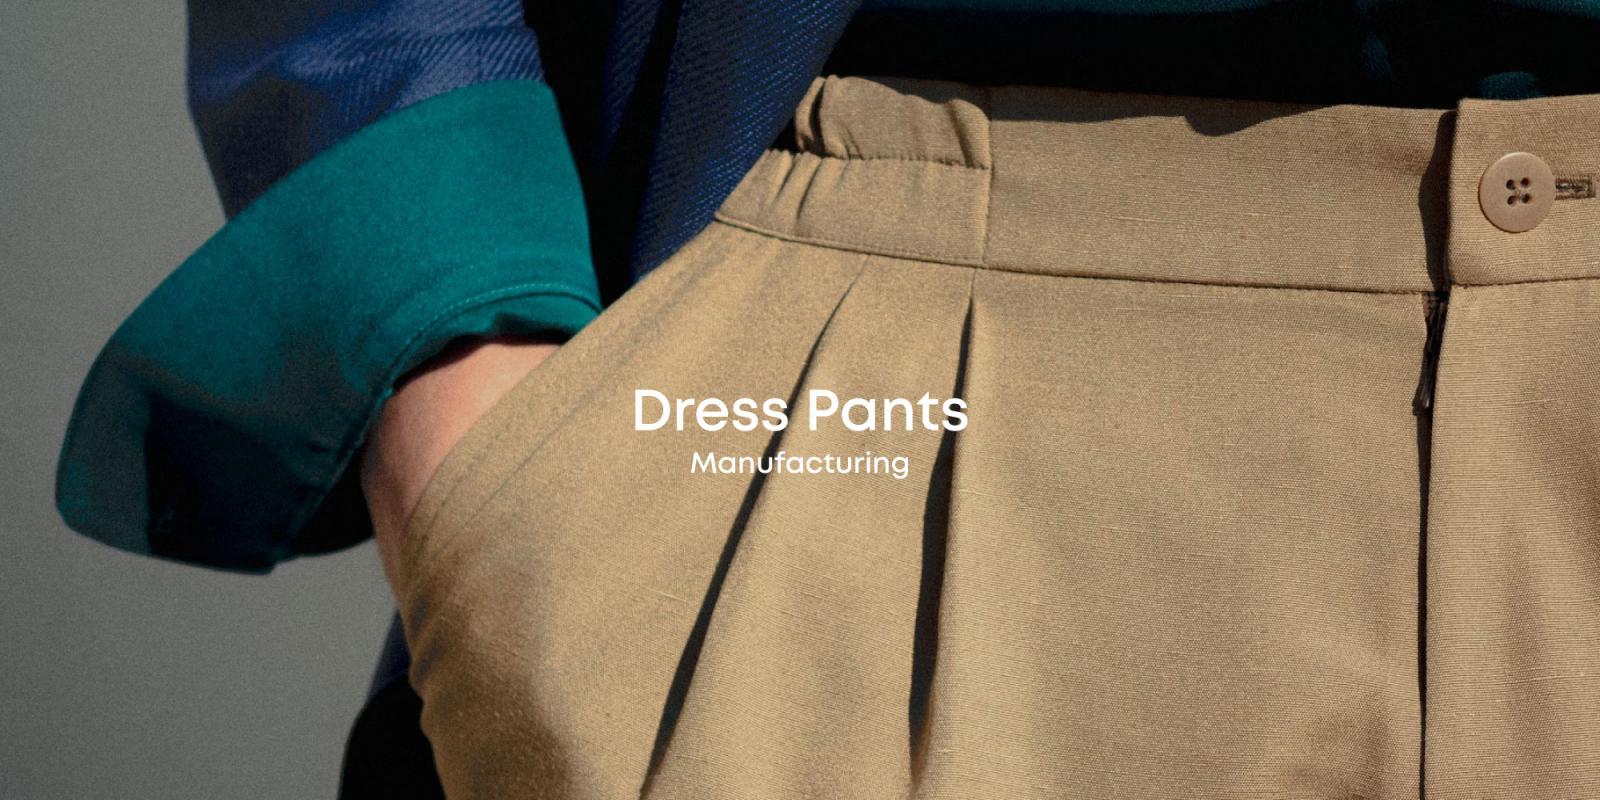 Dress Pants Manufacturing